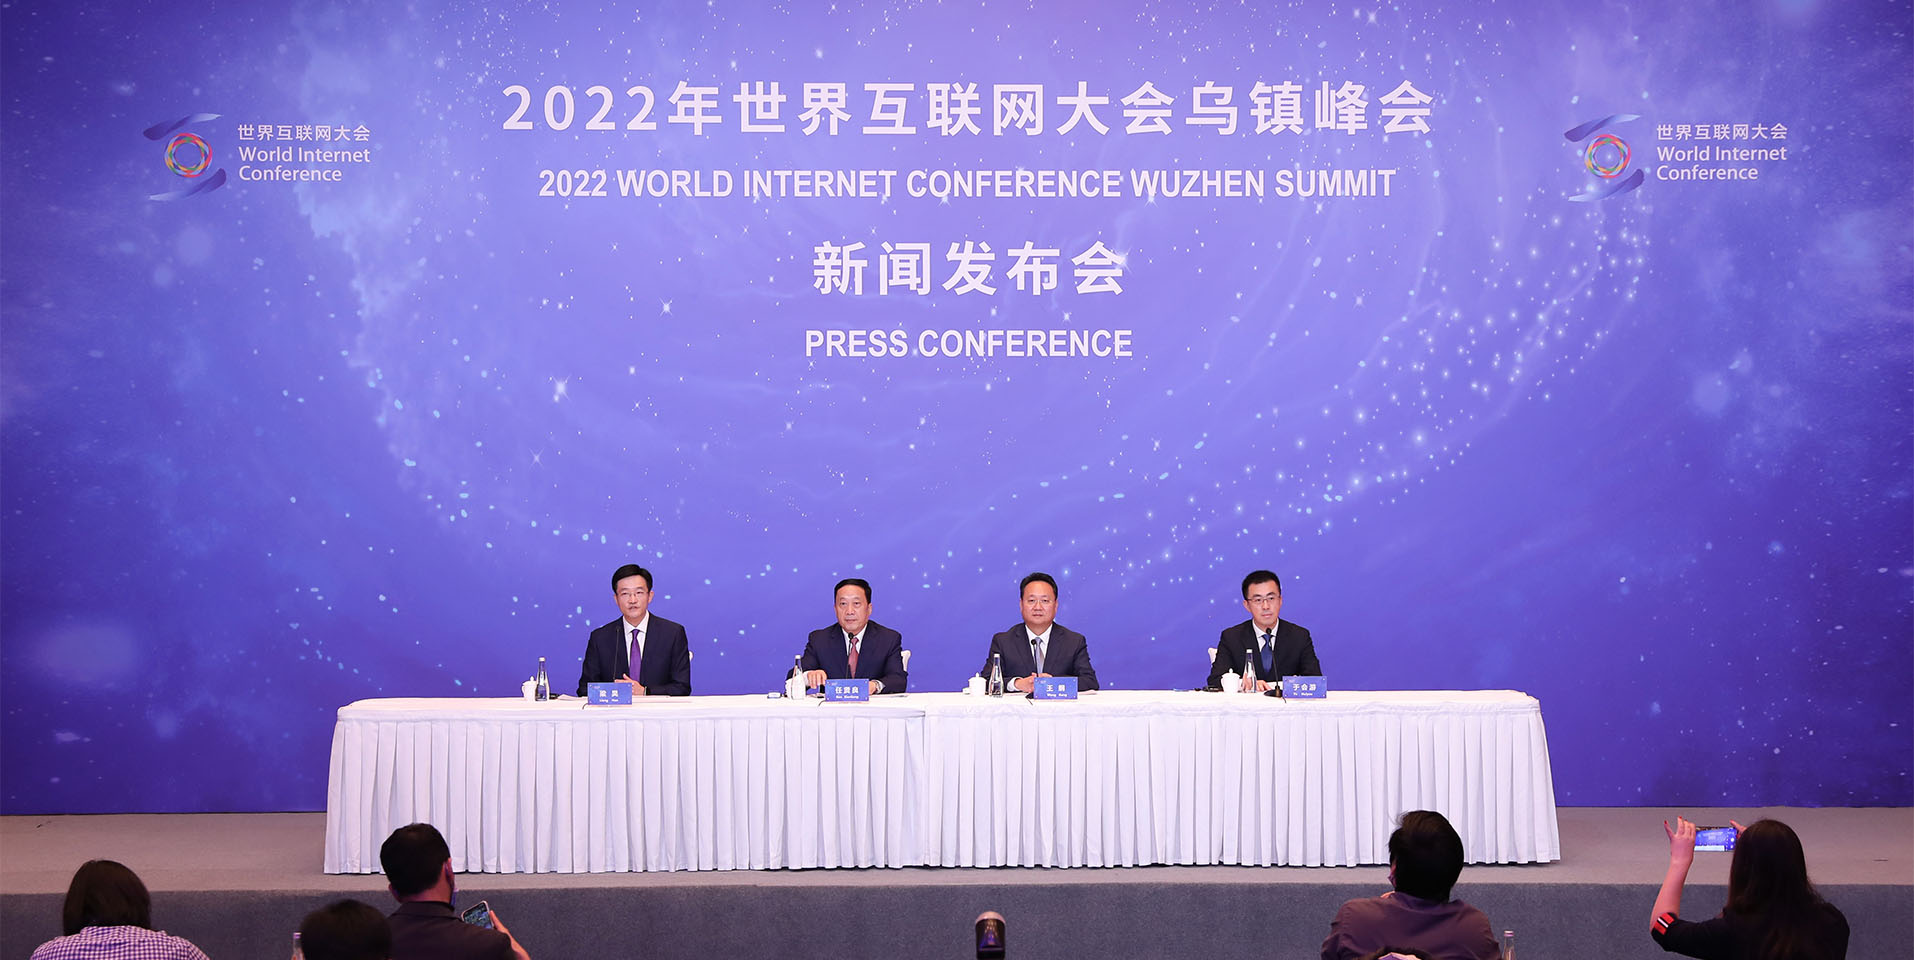 2022 World Internet Conference Wuzhen Summit  to kick off on Nov 9